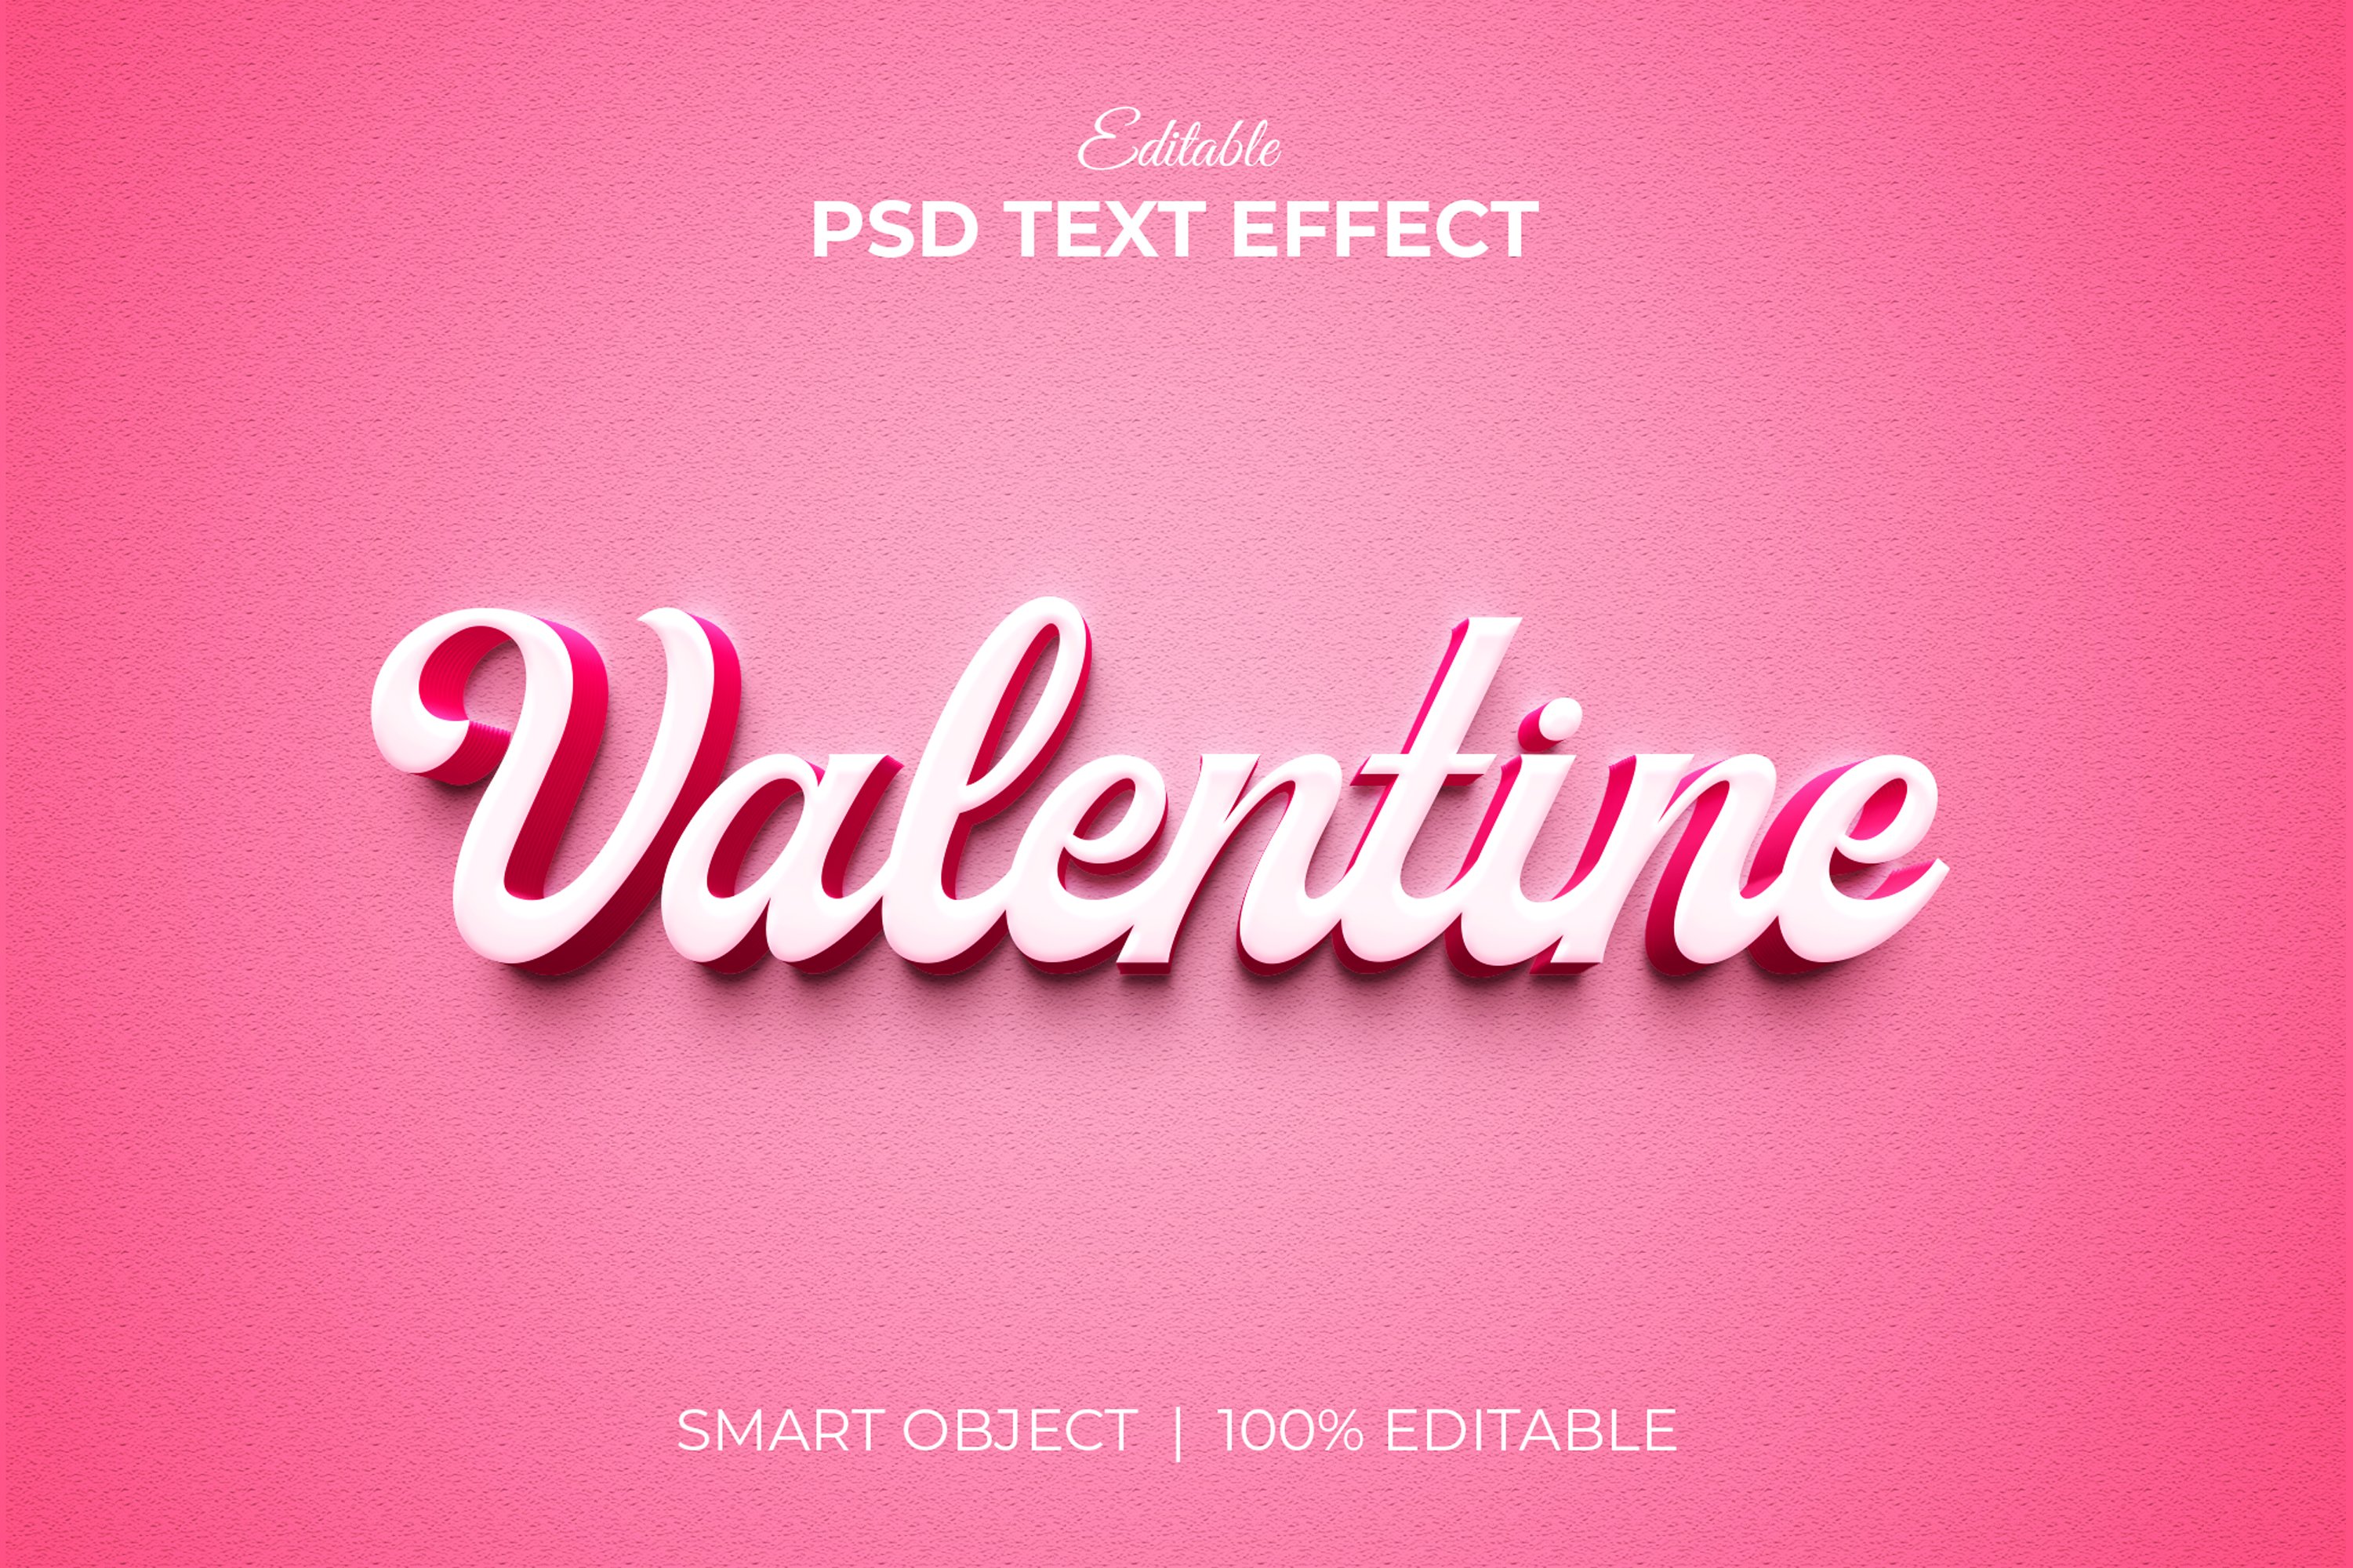 Editable 3d Text effect PSD  Bundlepreview image.